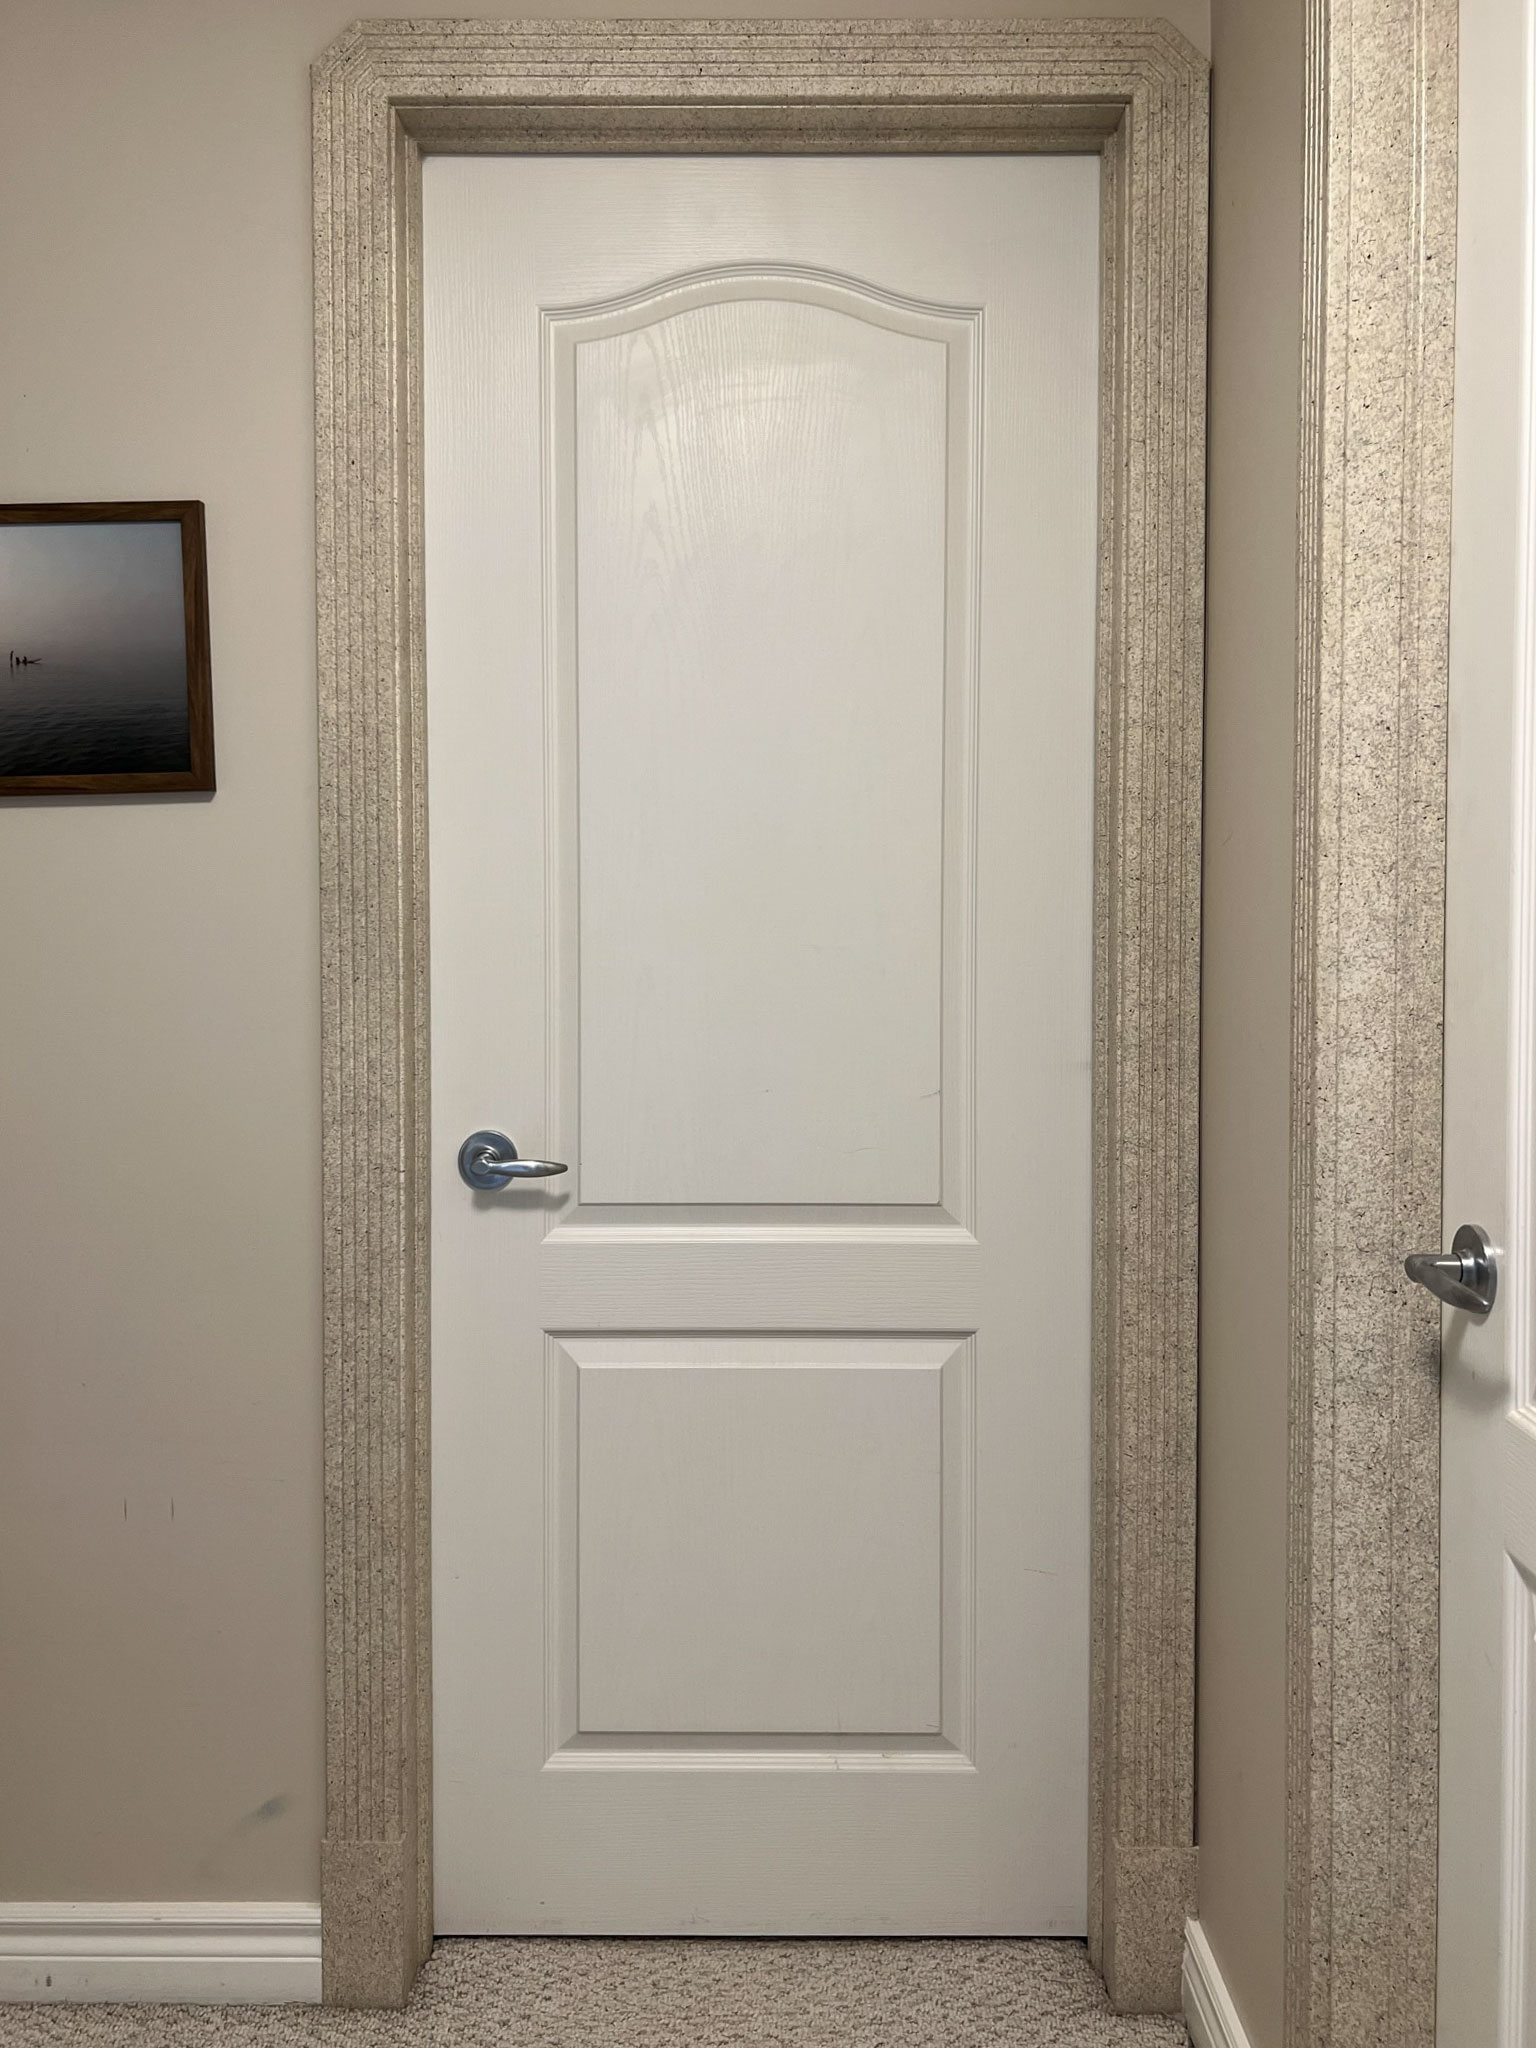 plain white door with textured beige trim and beige walls